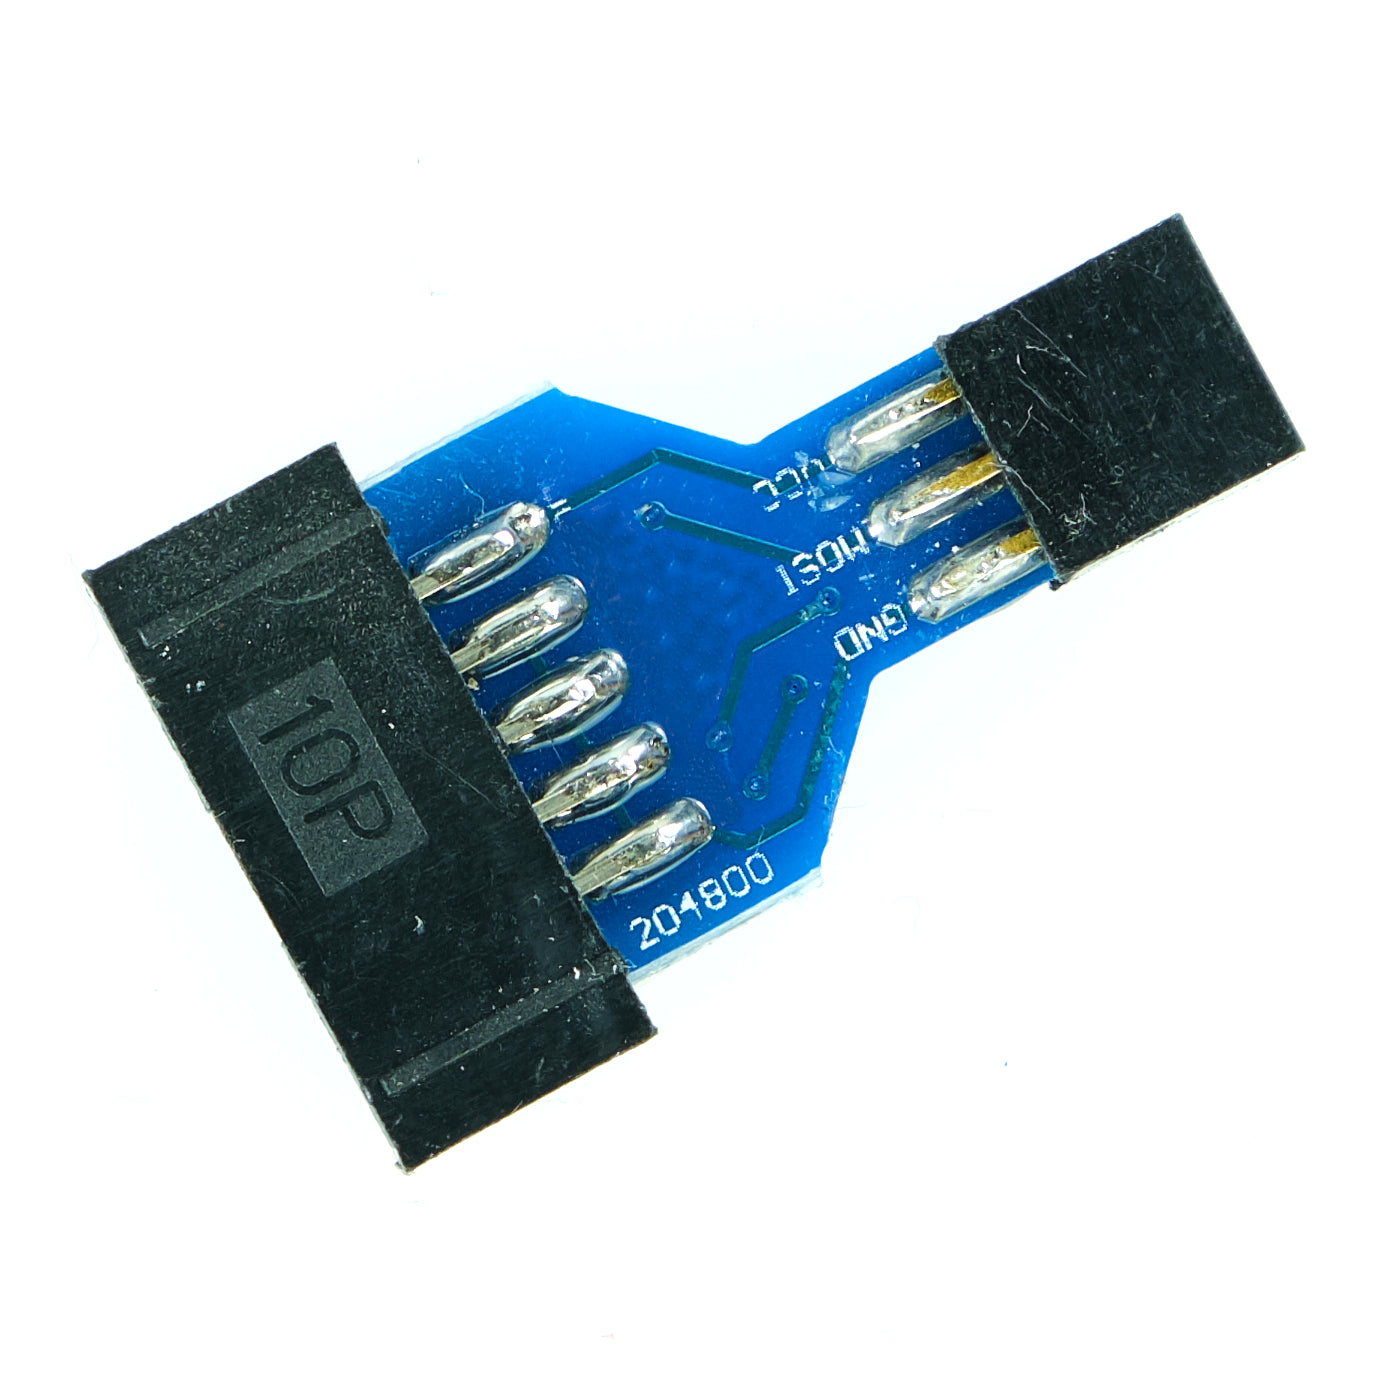 ISP Adapter, 6-pin to 10-pin